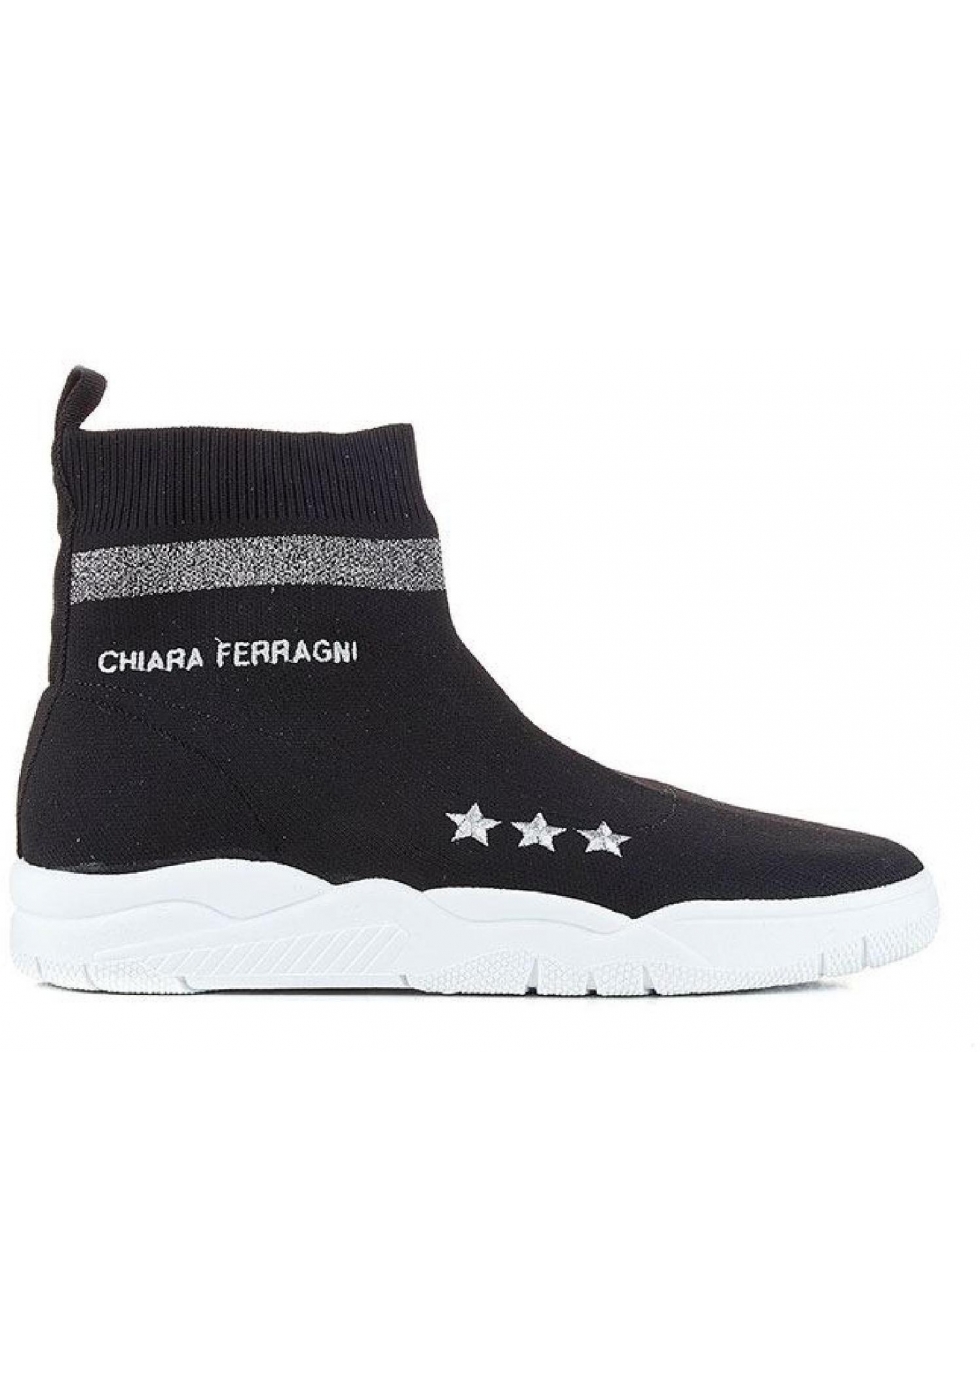 Chiara Ferragni black knitted hi top sneakers shoes - Italian Boutique